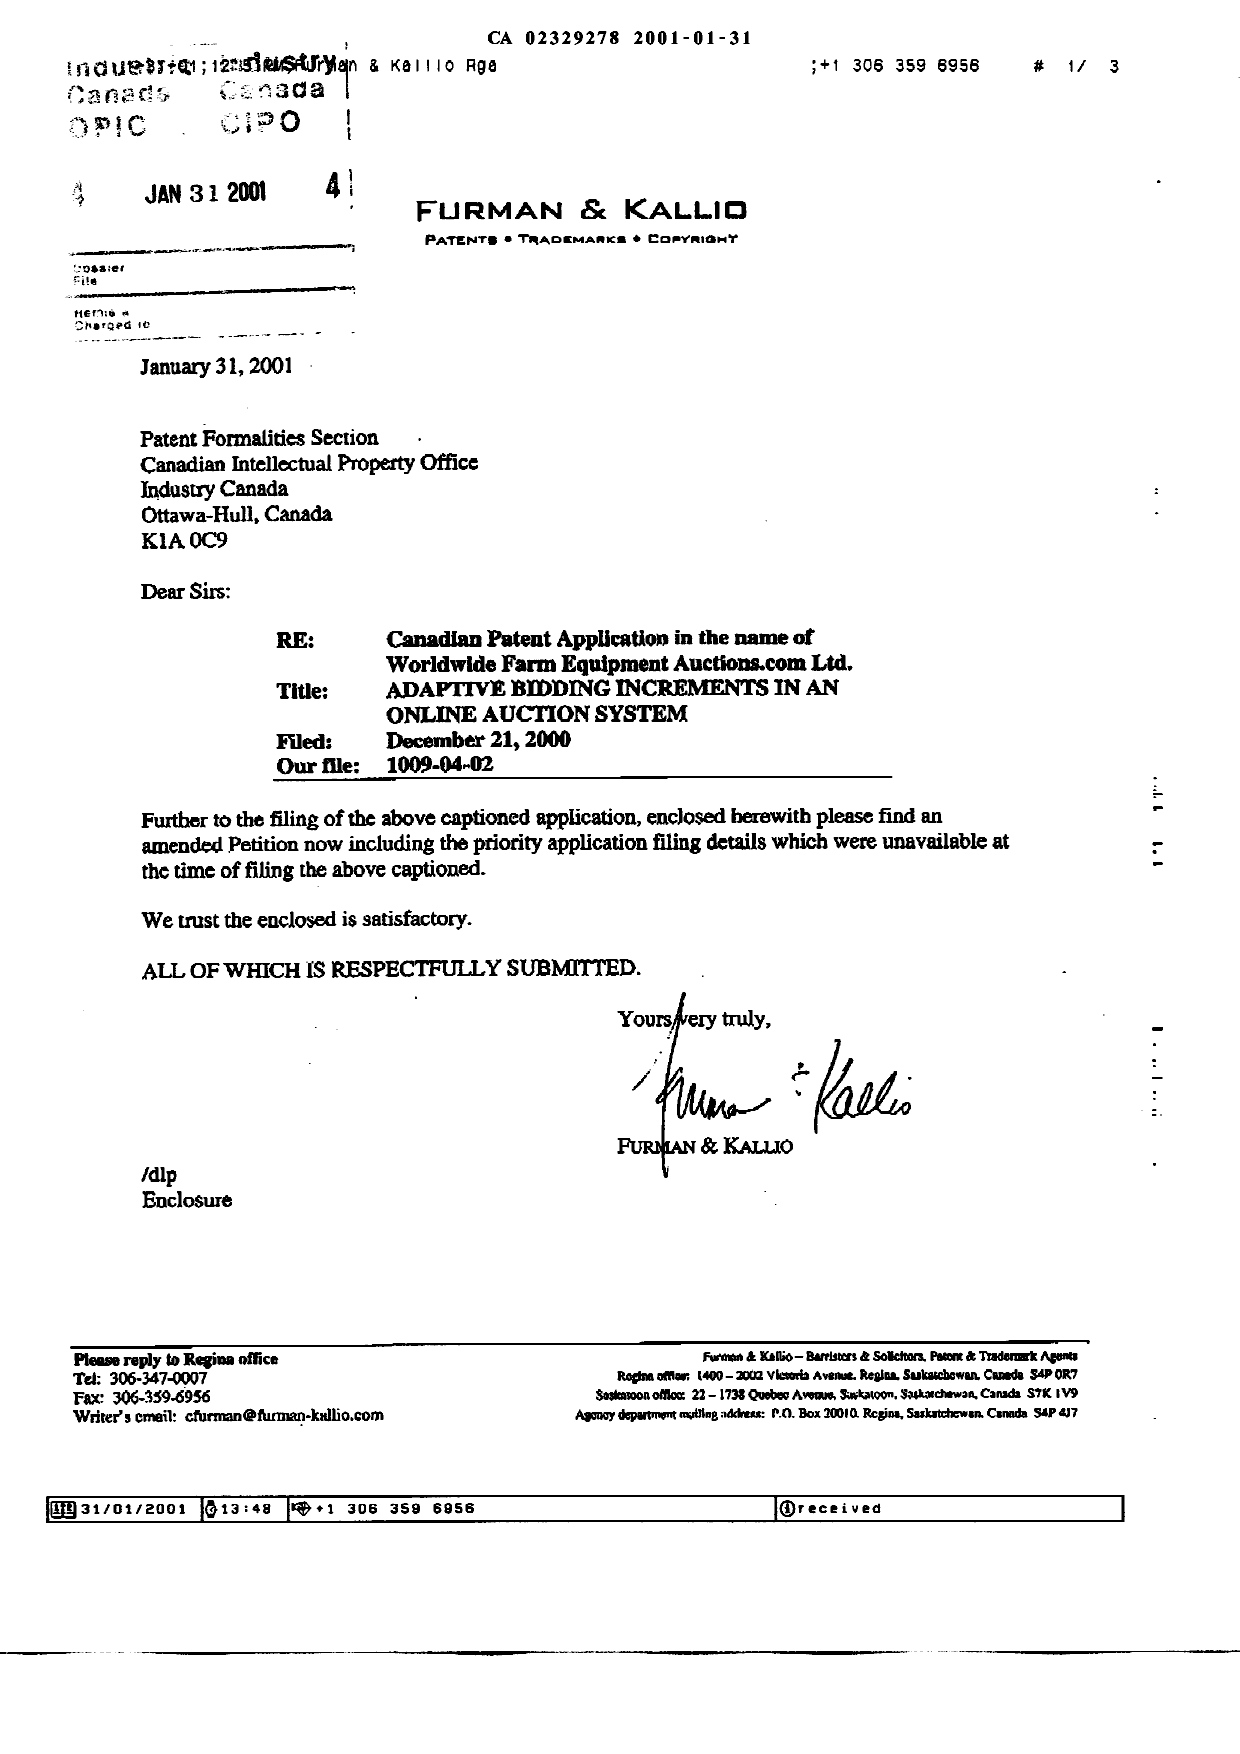 Canadian Patent Document 2329278. Correspondence 20010131. Image 6 of 6